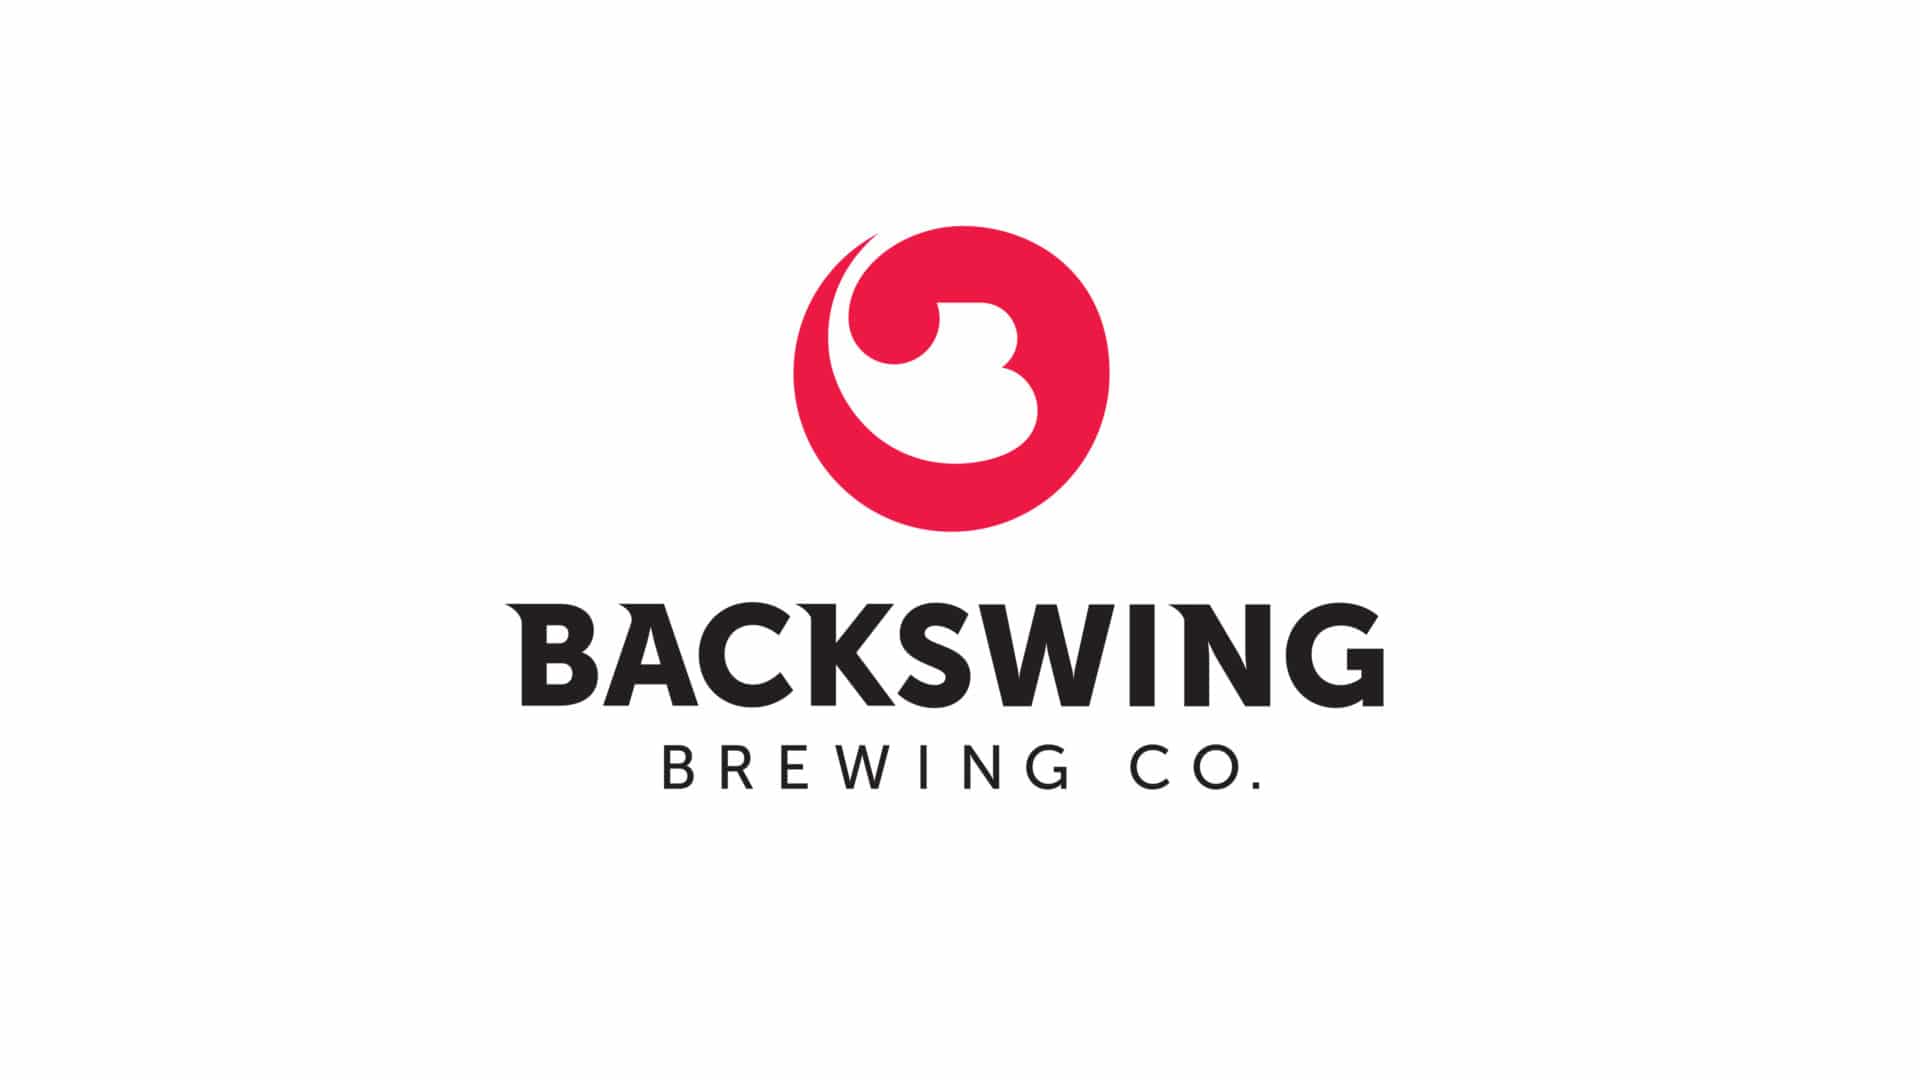 Backswing Brewing branding: logo on white background